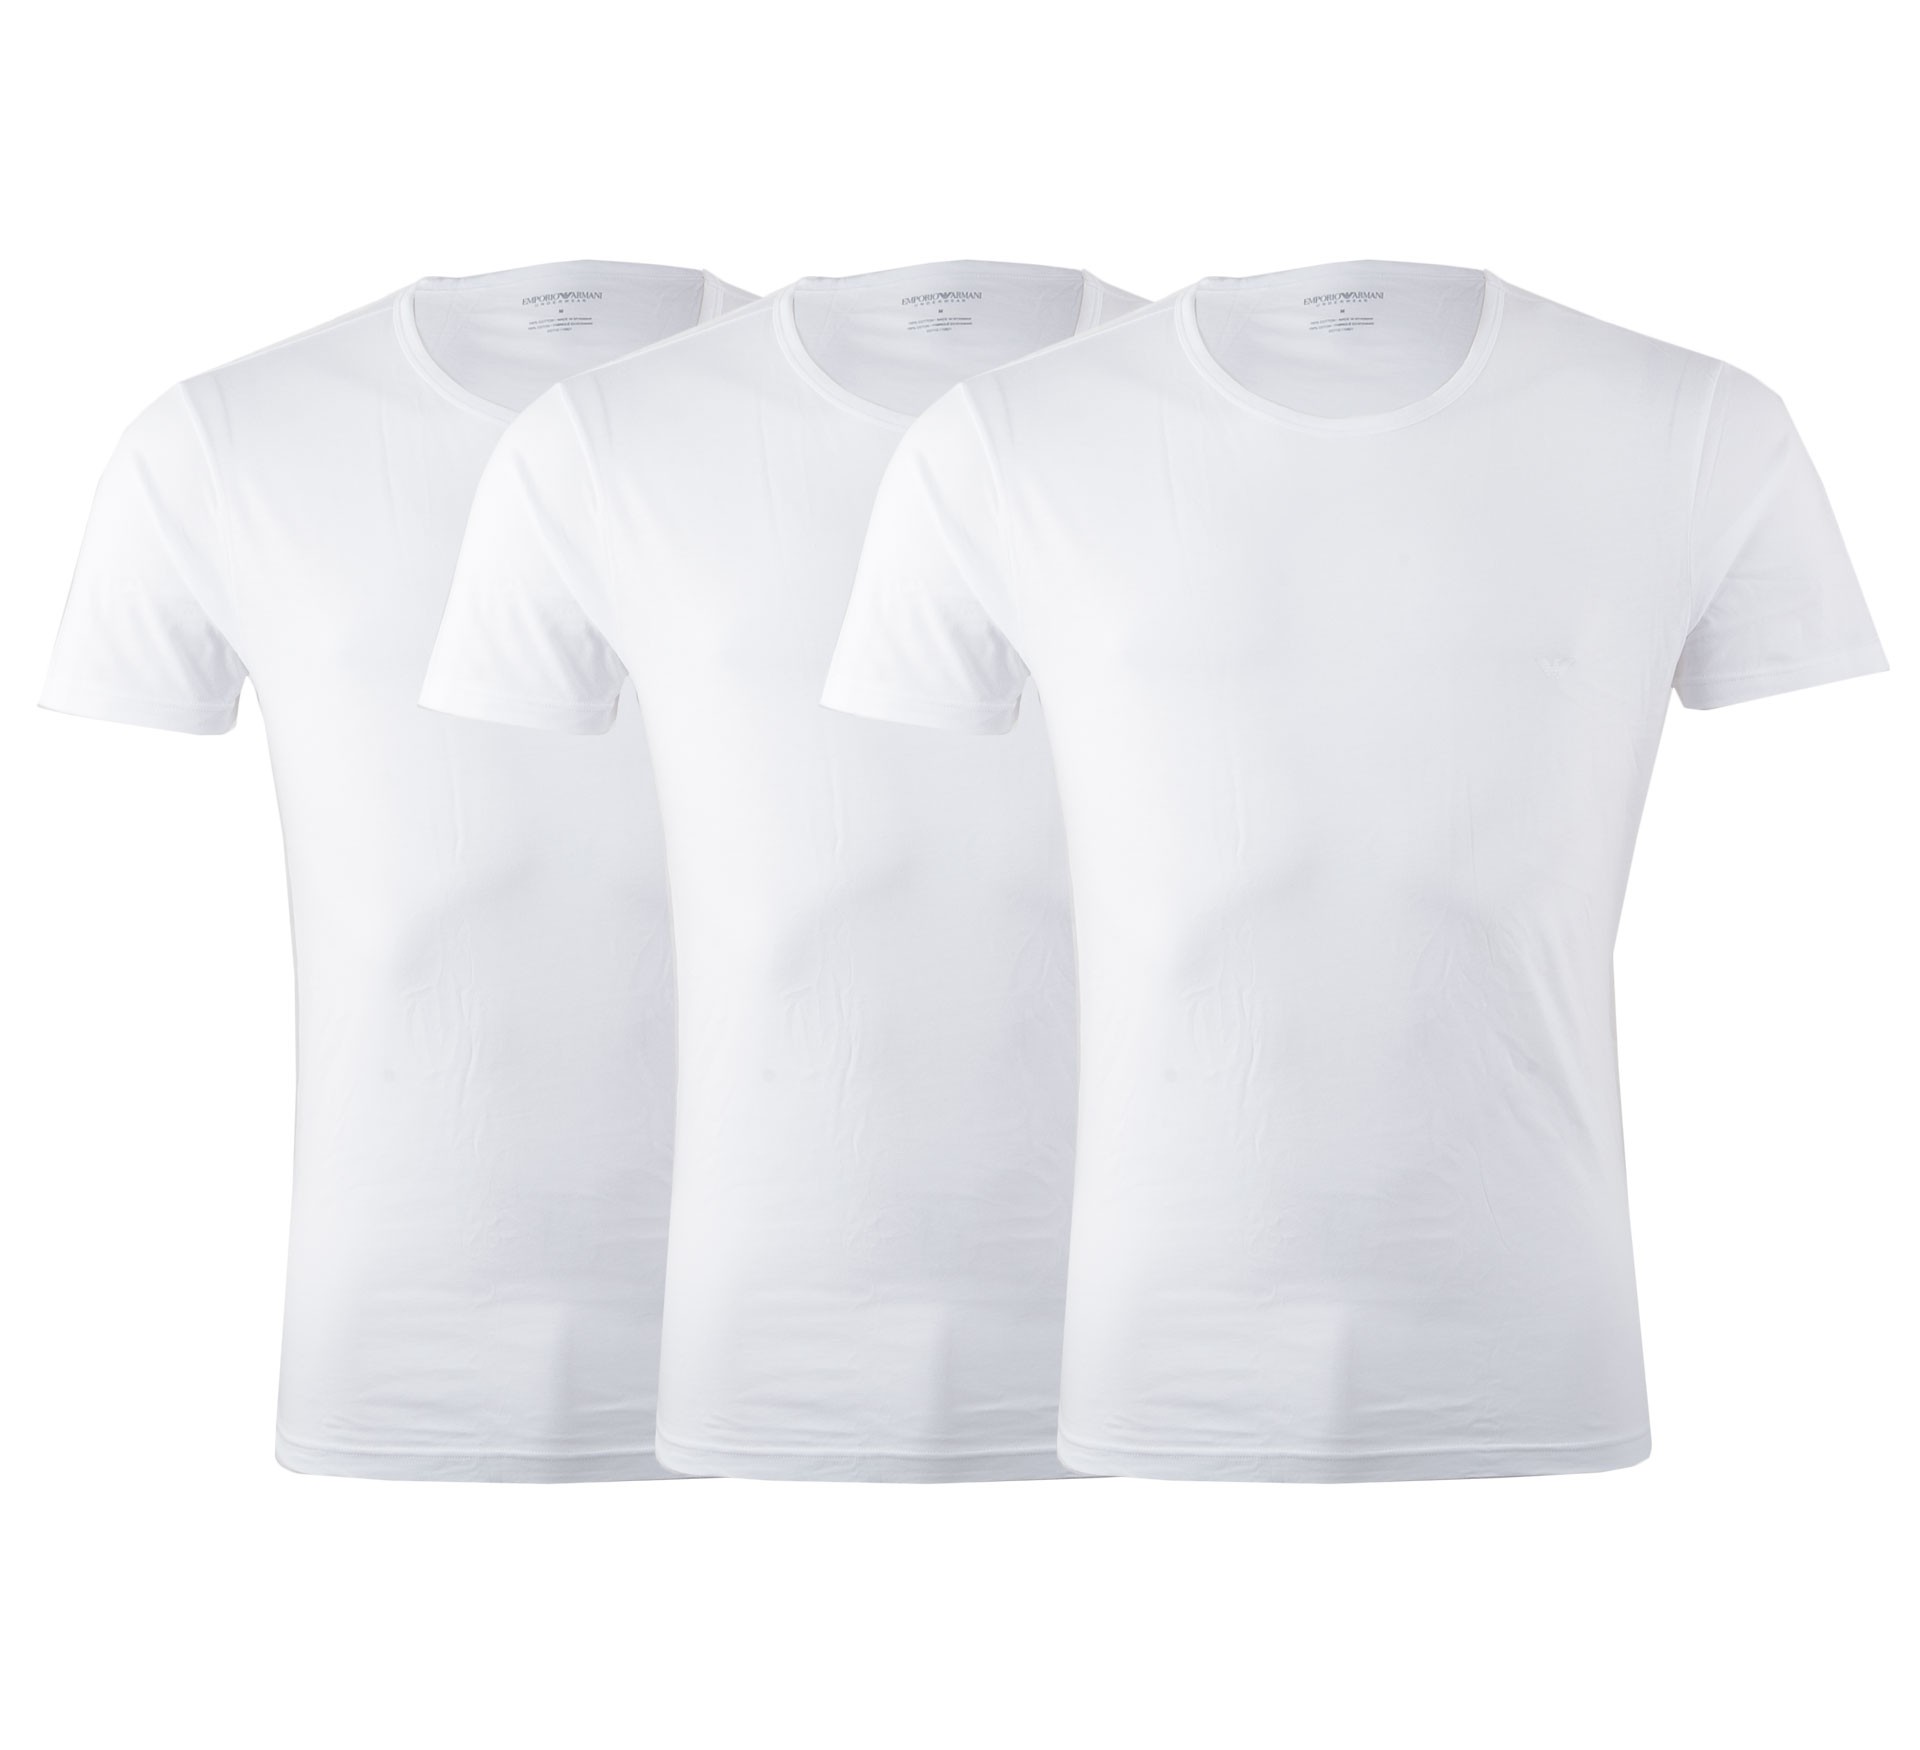 Plutosport - Emporio Armani Crew Neck T-shirt S/Sleeve (3-pack)